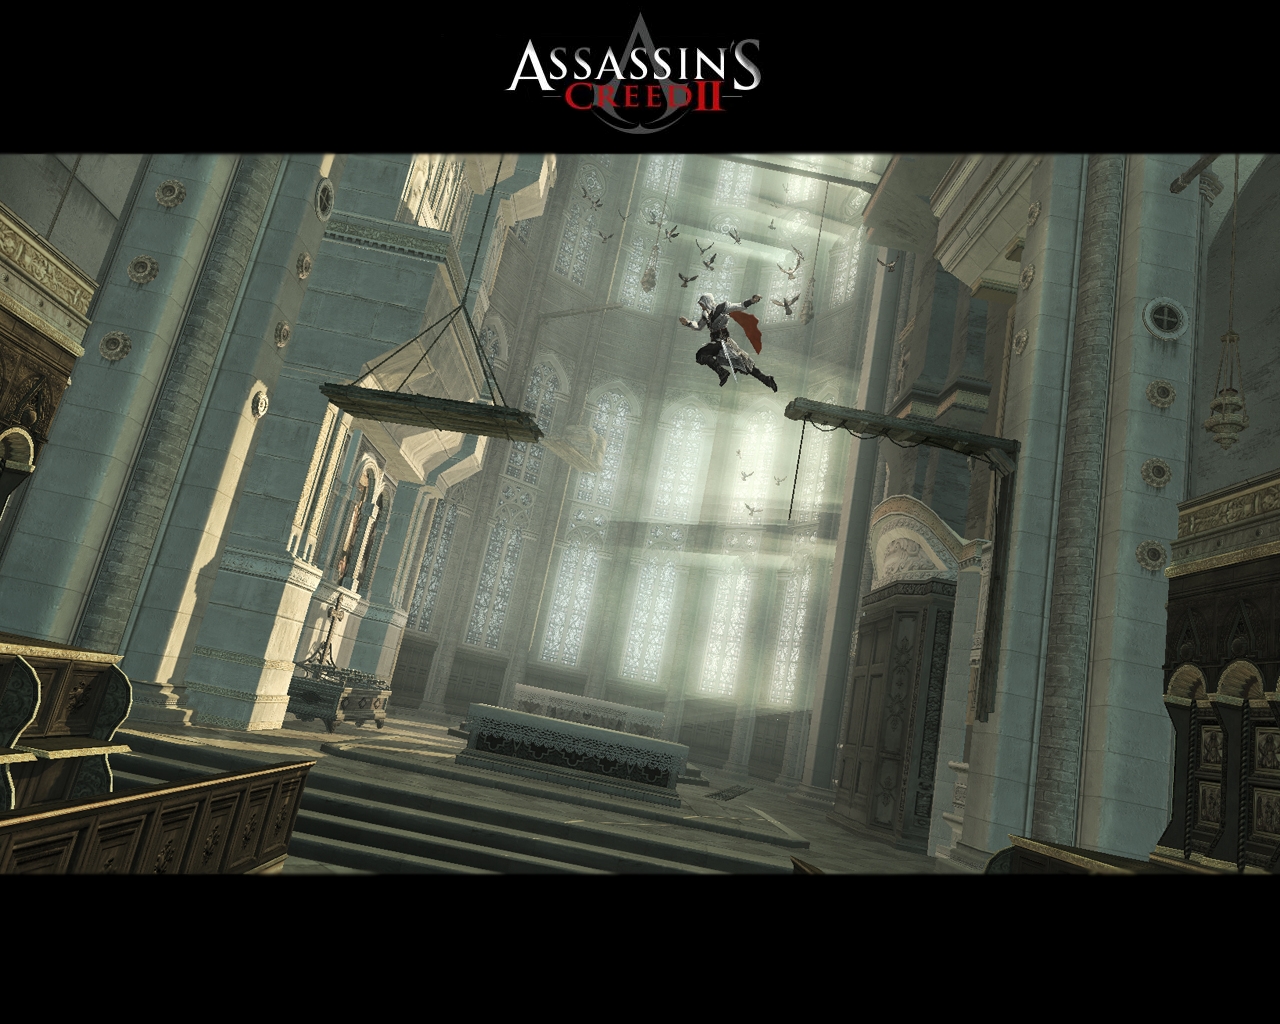 Assasın creed 2. Ассасин Крид 2. Assassins Creed 2 склеп Аудиторе. Assassins Creed 2 screenshots. Assassin’s Creed (игра) 2007.